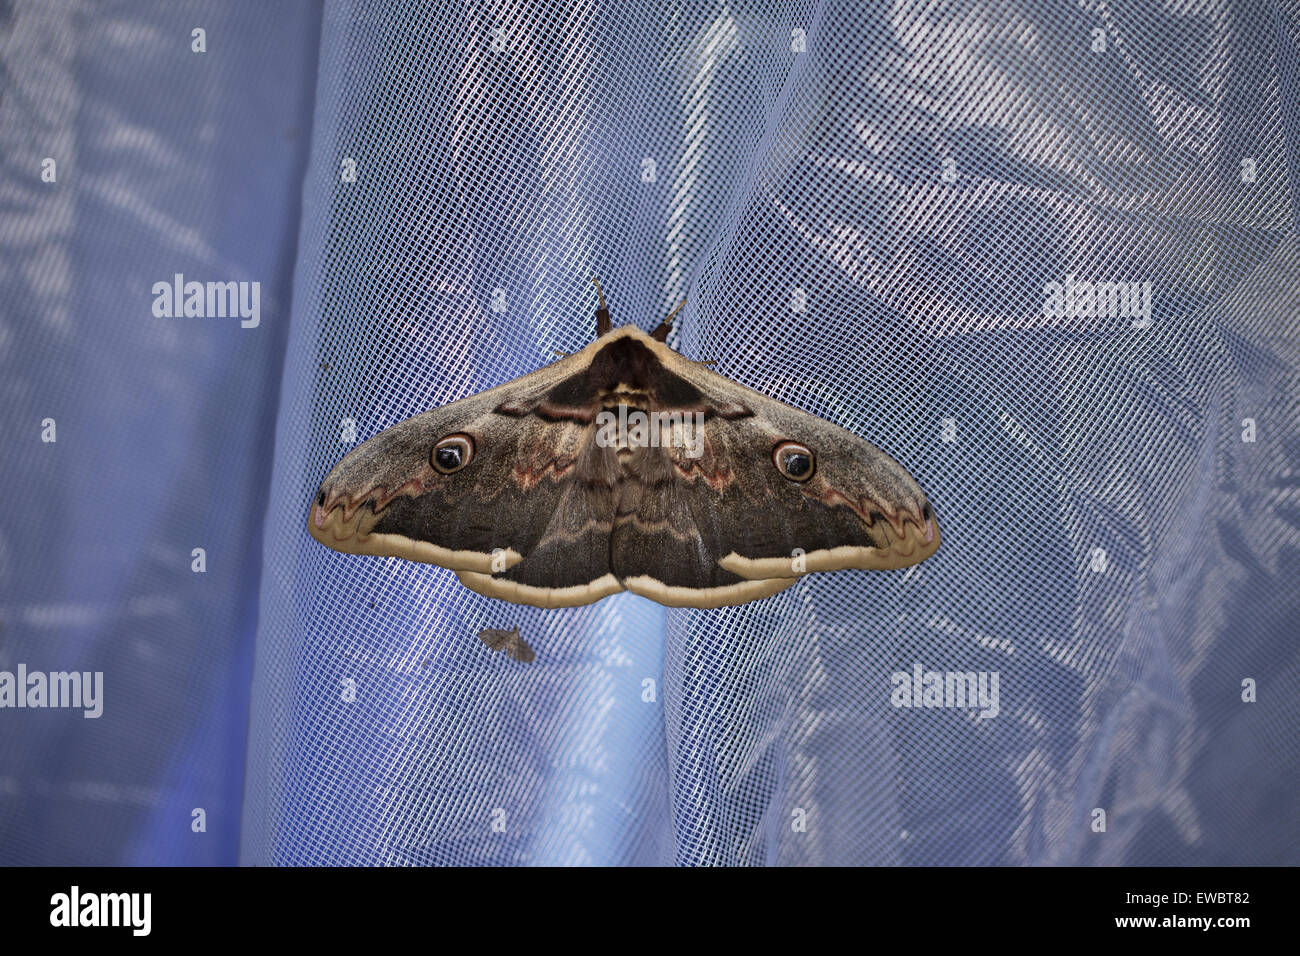 Grand Emperor Moth, Giant Peacock Moth, homme, grosses Nachtpfauenauge Nachtpfauenauge, Wiener, Männchen, Saturnia pyri Banque D'Images